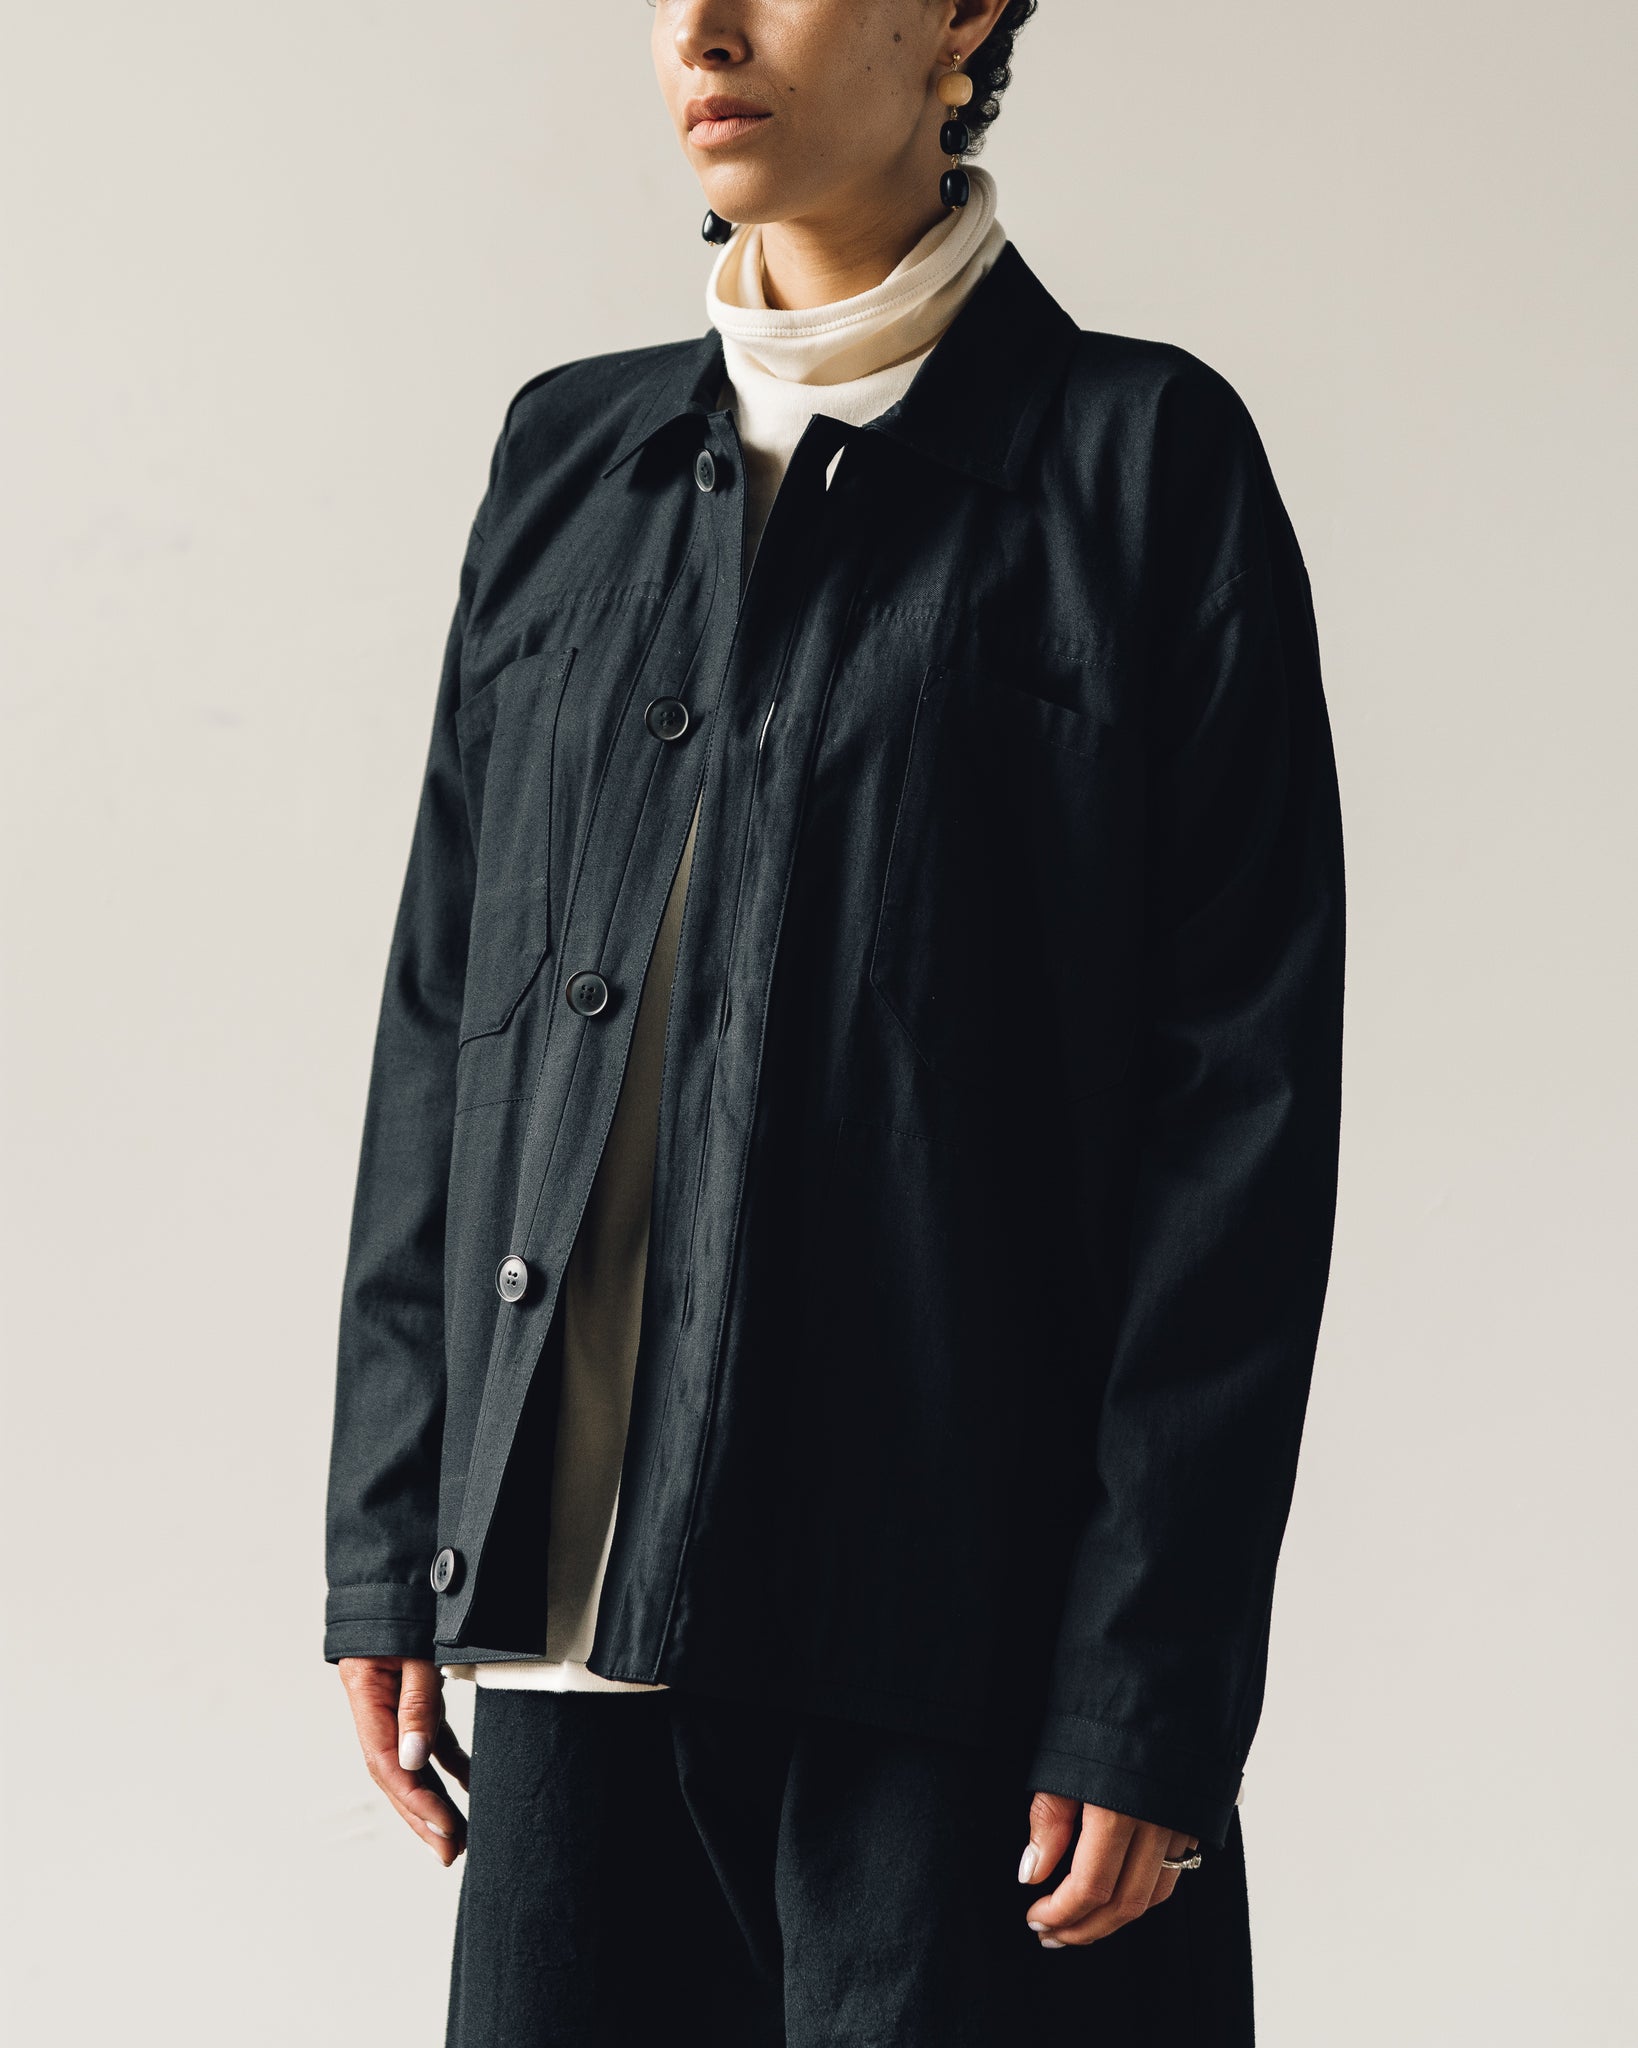 Jan-Jan Van Essche Jacket #30, Black Soft Twill | Glasswing